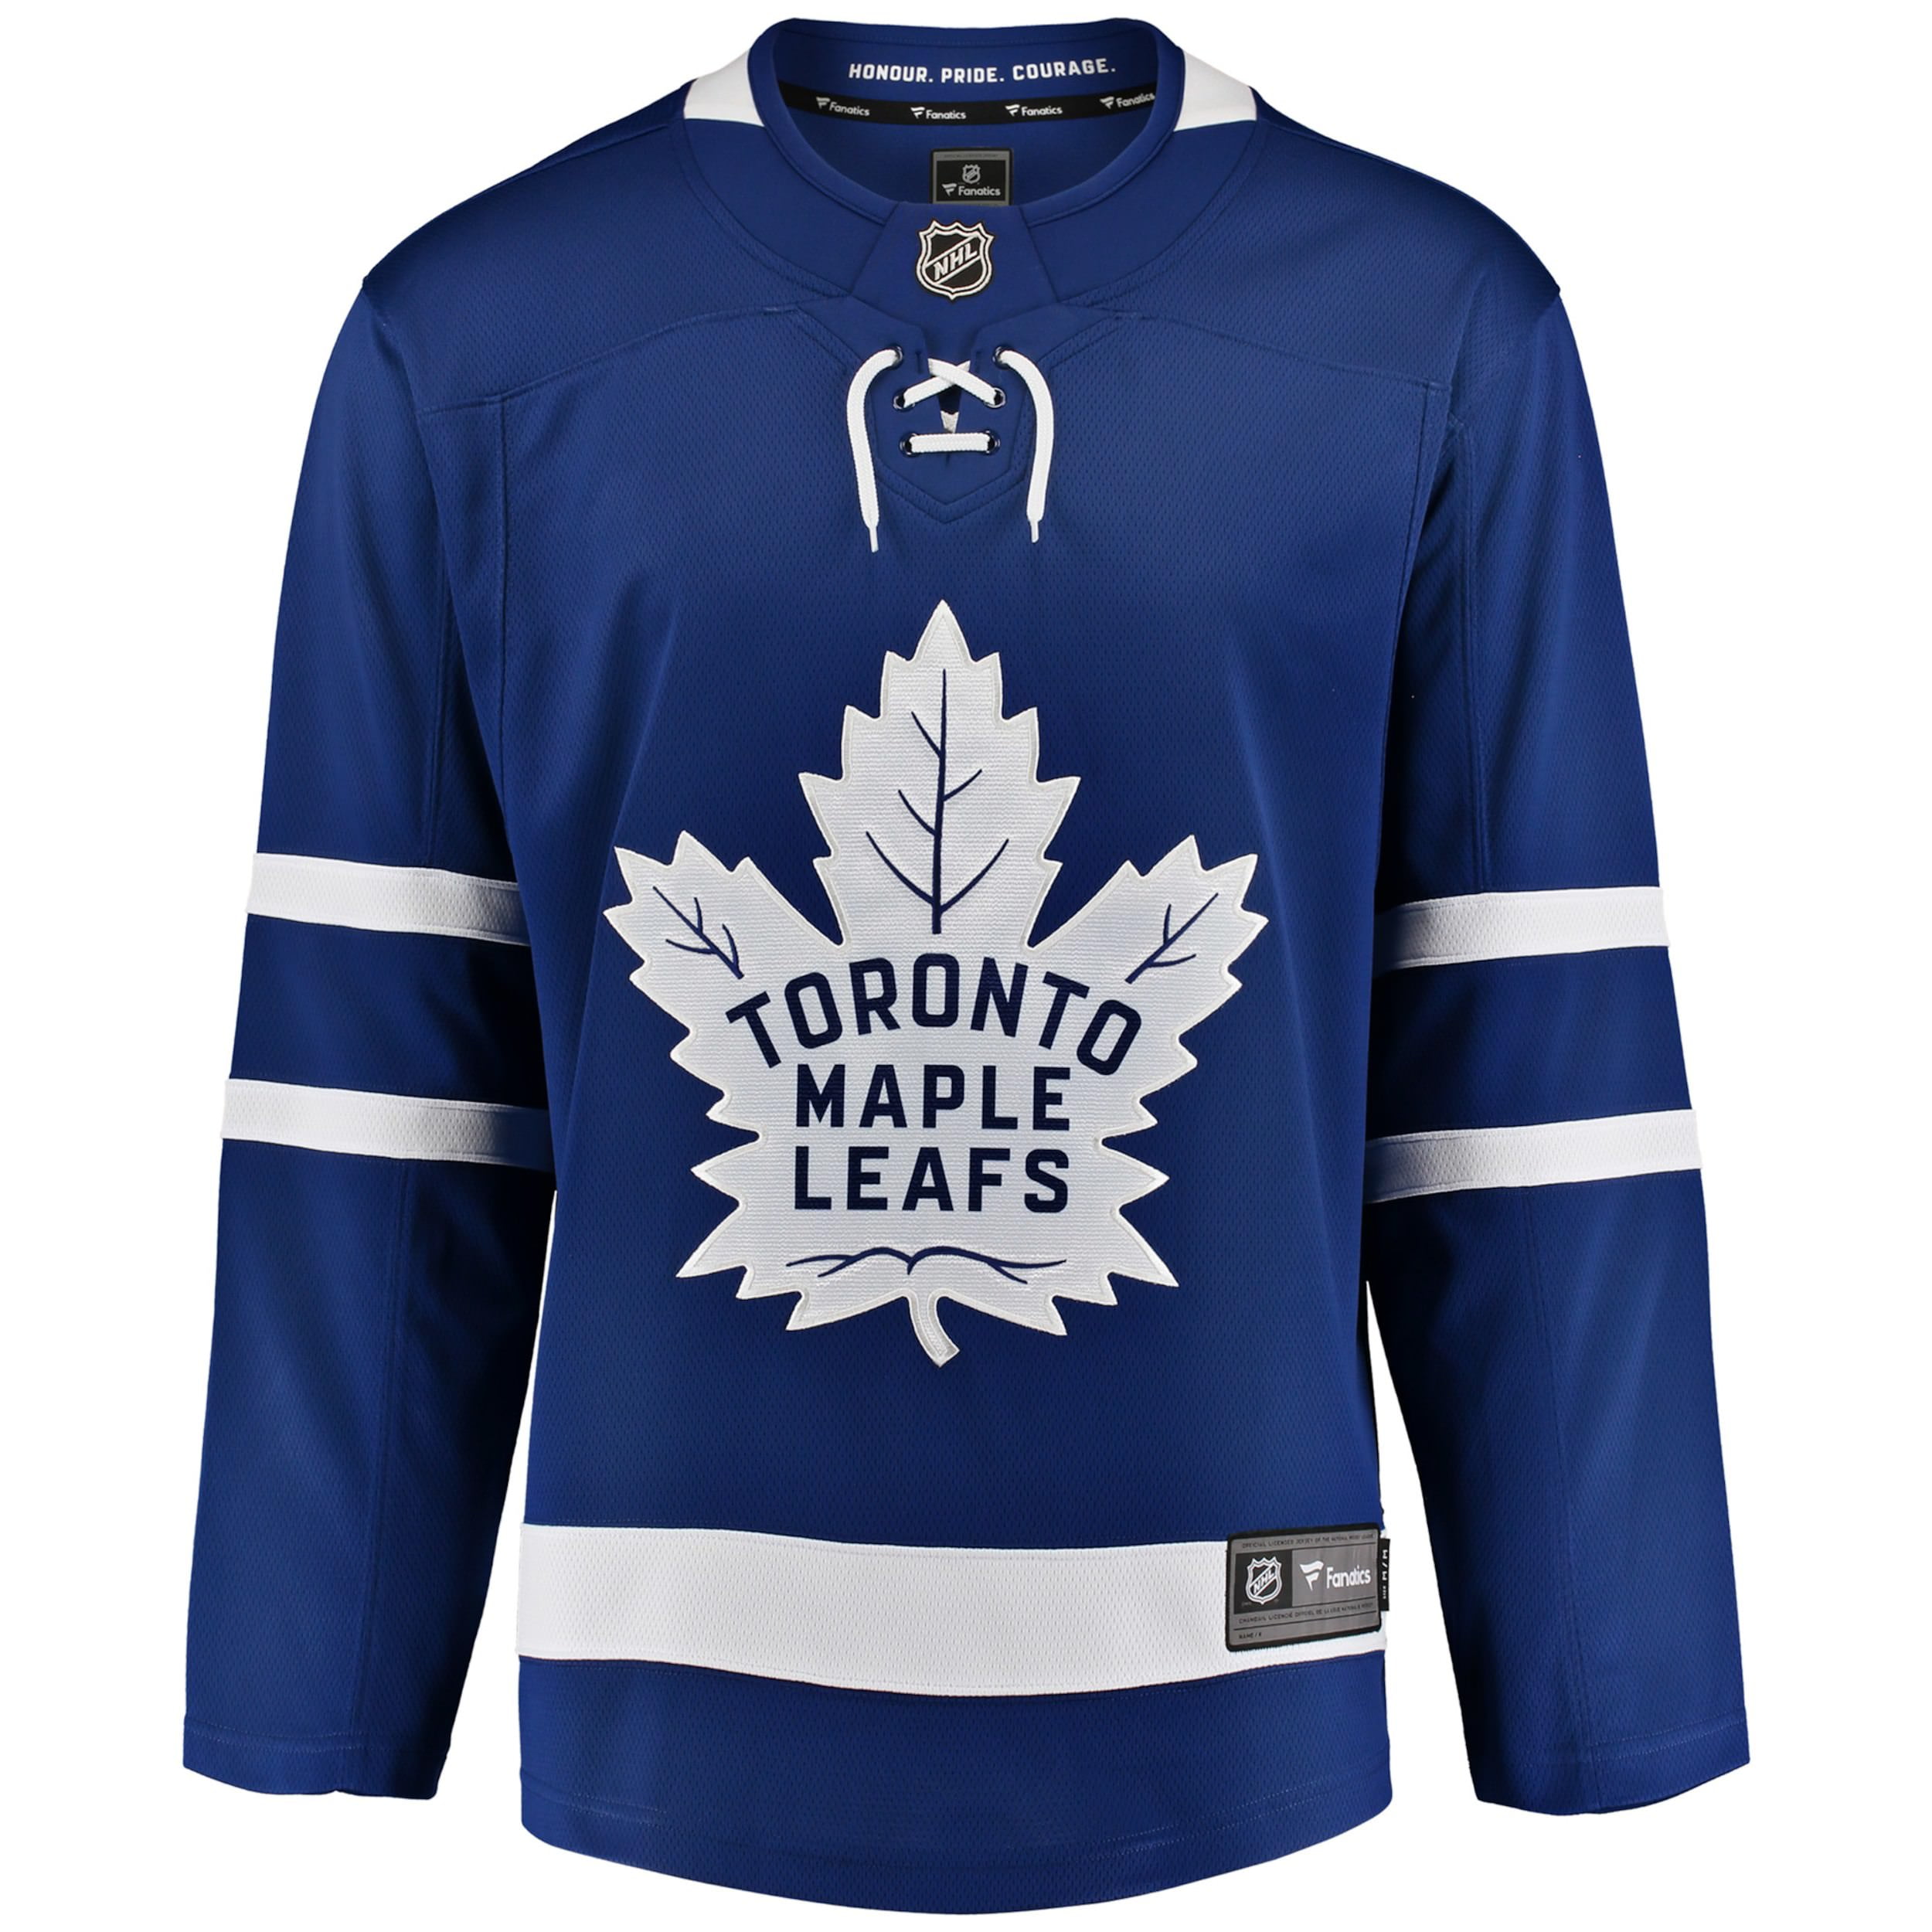 toronto leafs jersey